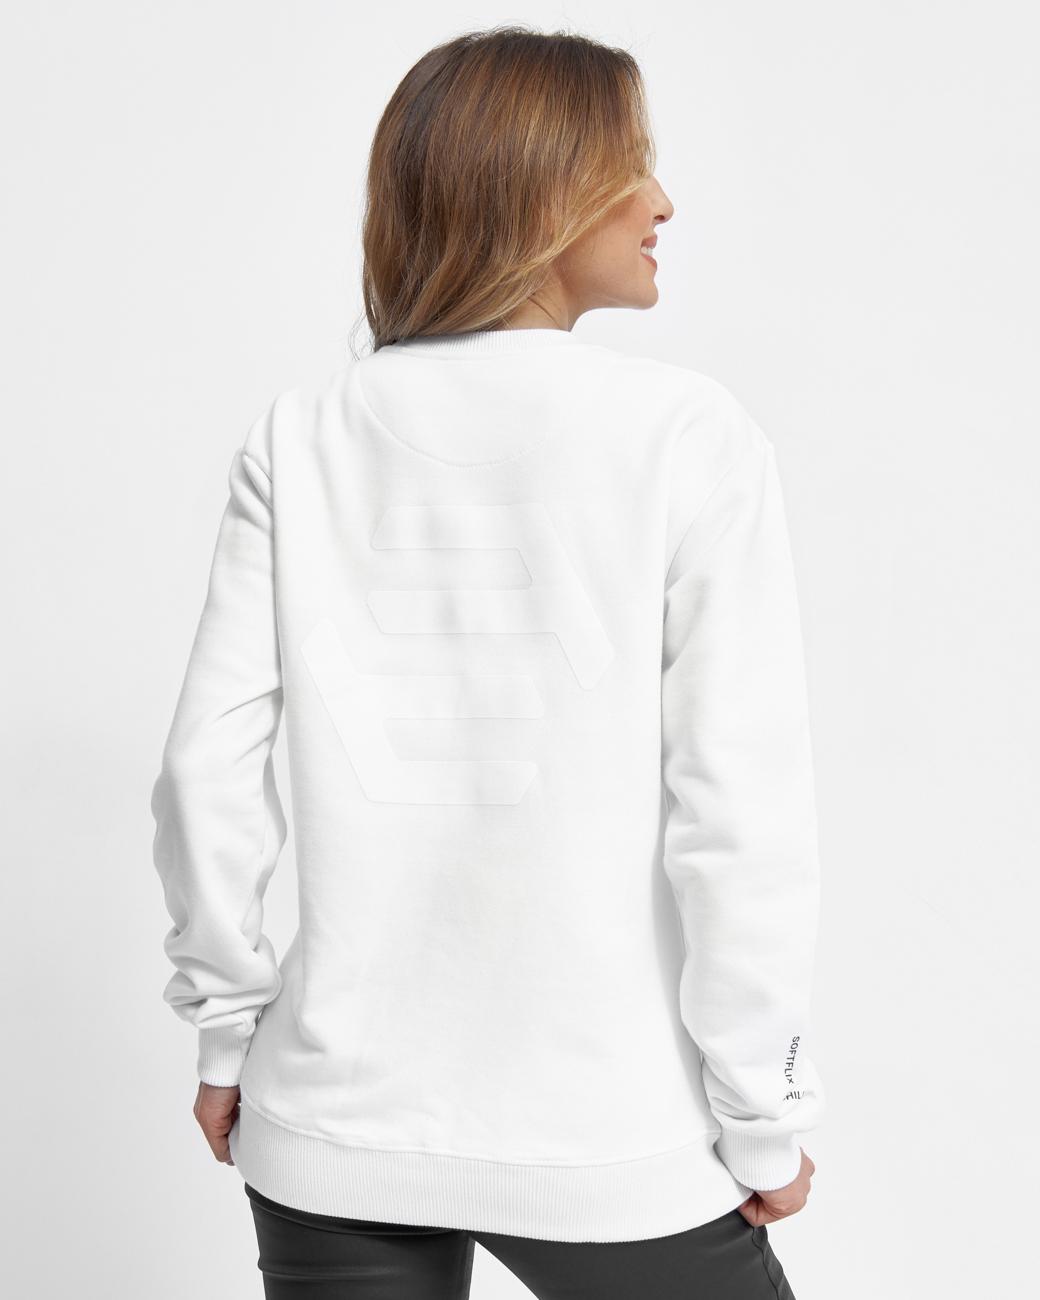 Sweatshirt SOFTFLIX white L